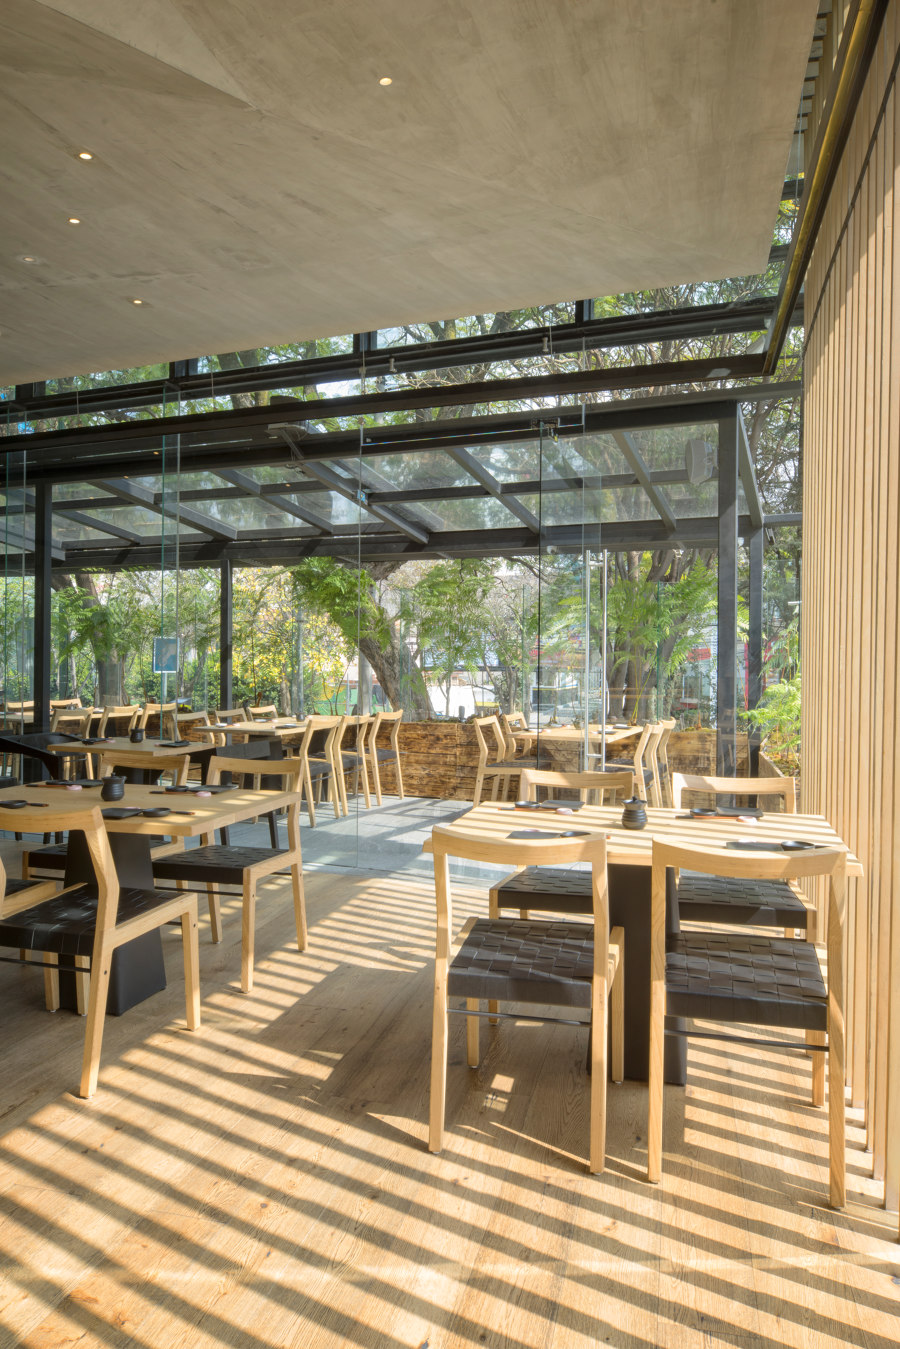 Oku Restaurant di Michan Architecture | Ristoranti - Interni